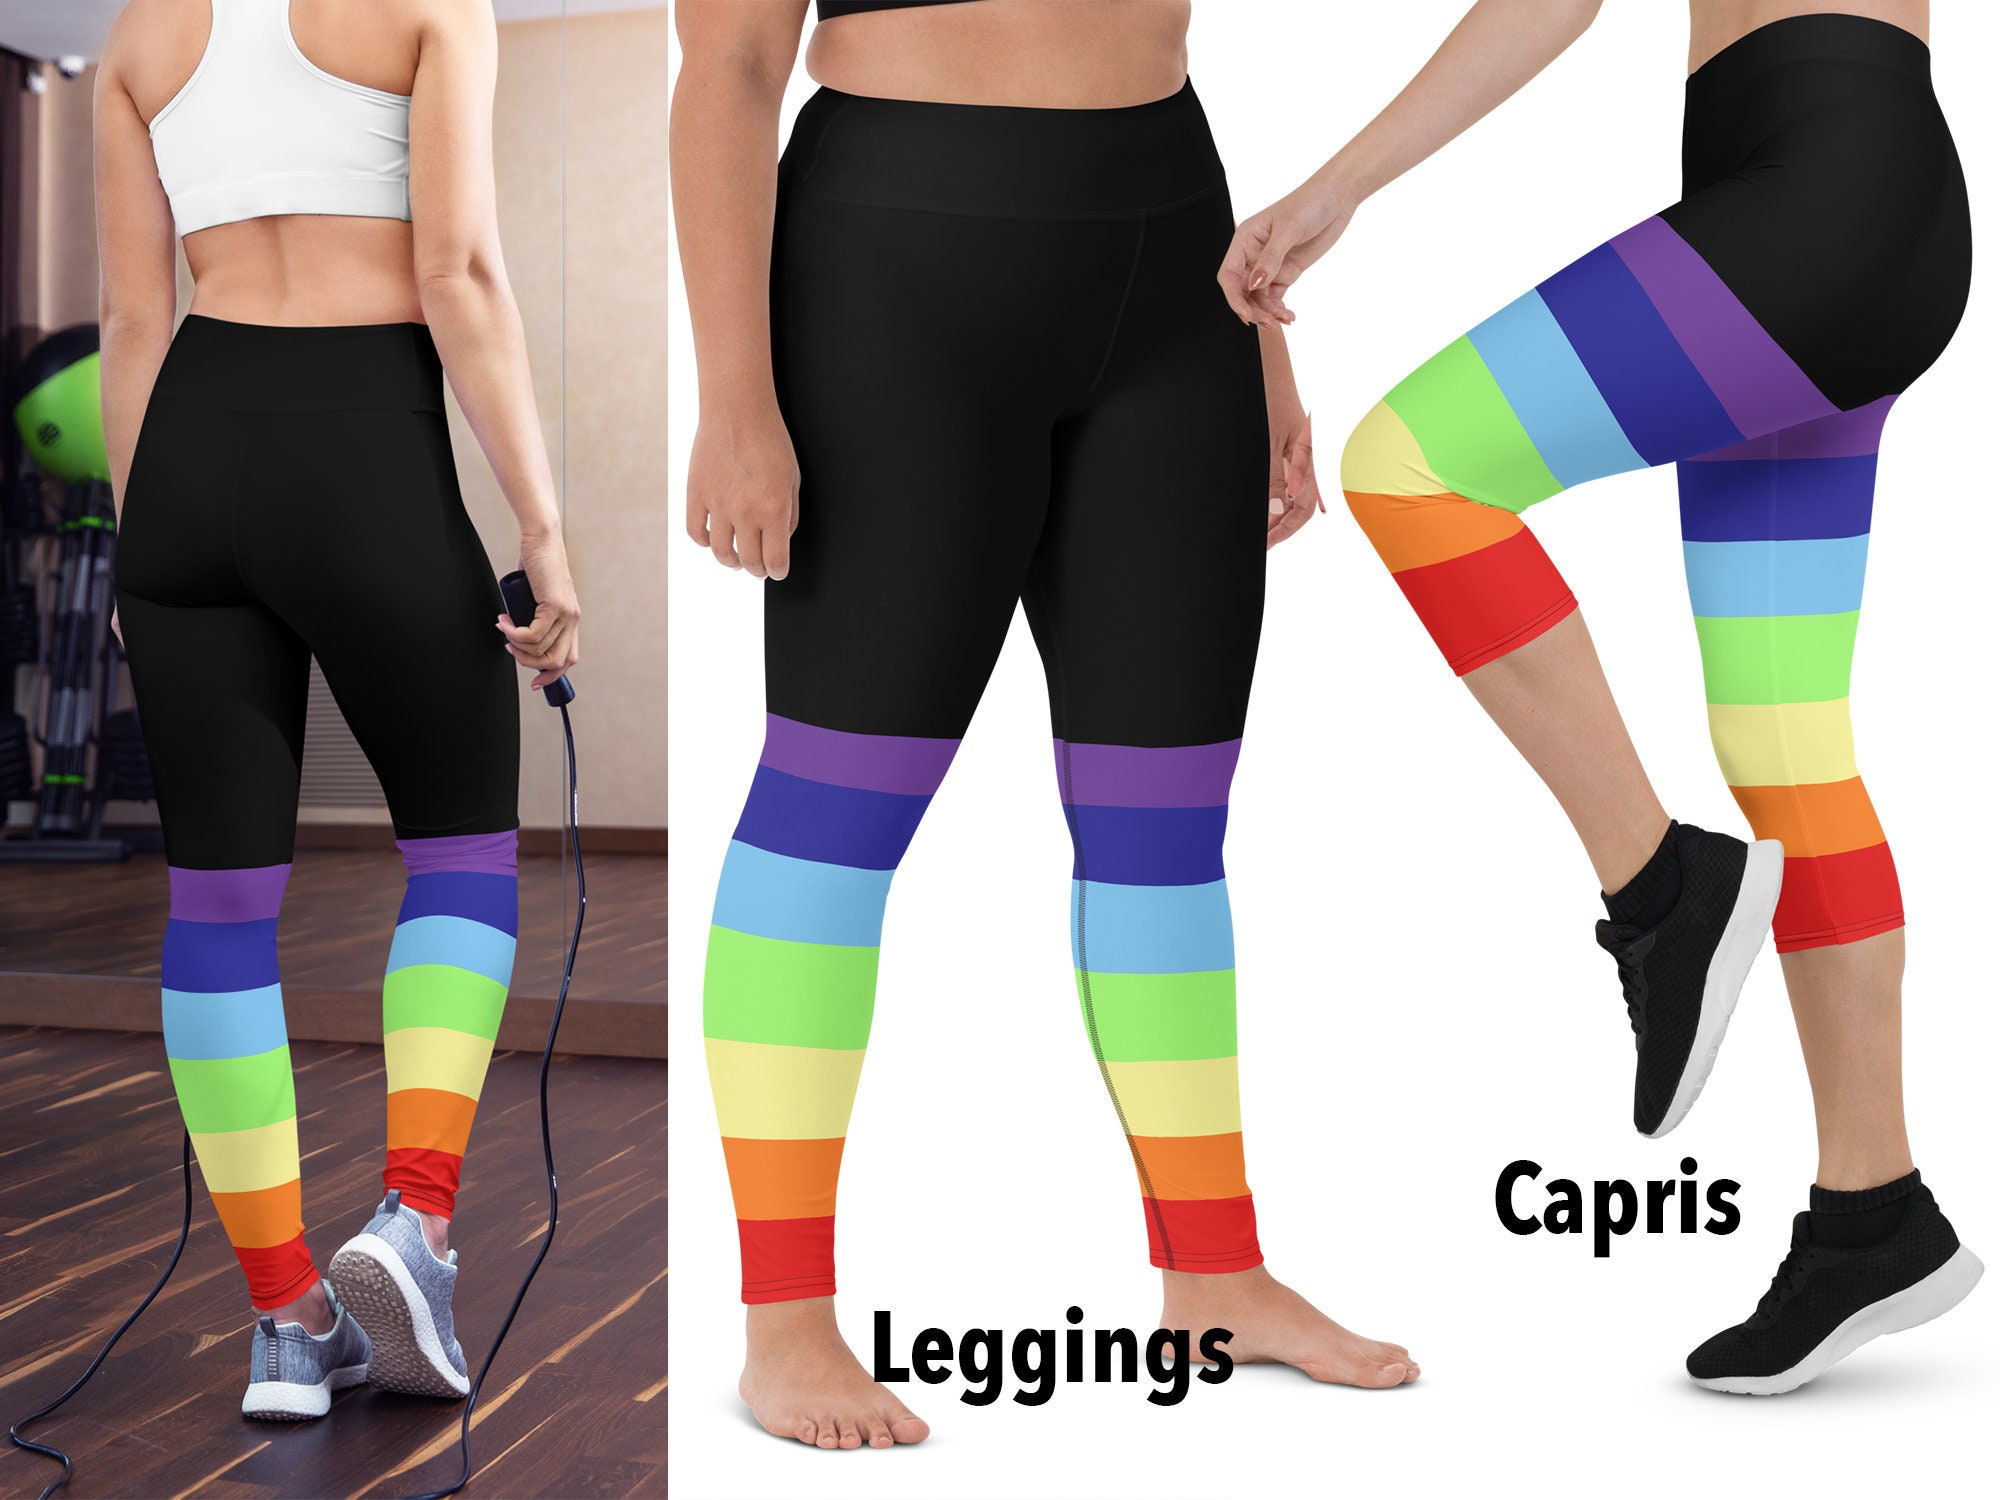 Rainbow Pride LGBT Striped Leggings Workout Woman Flag Lesbian